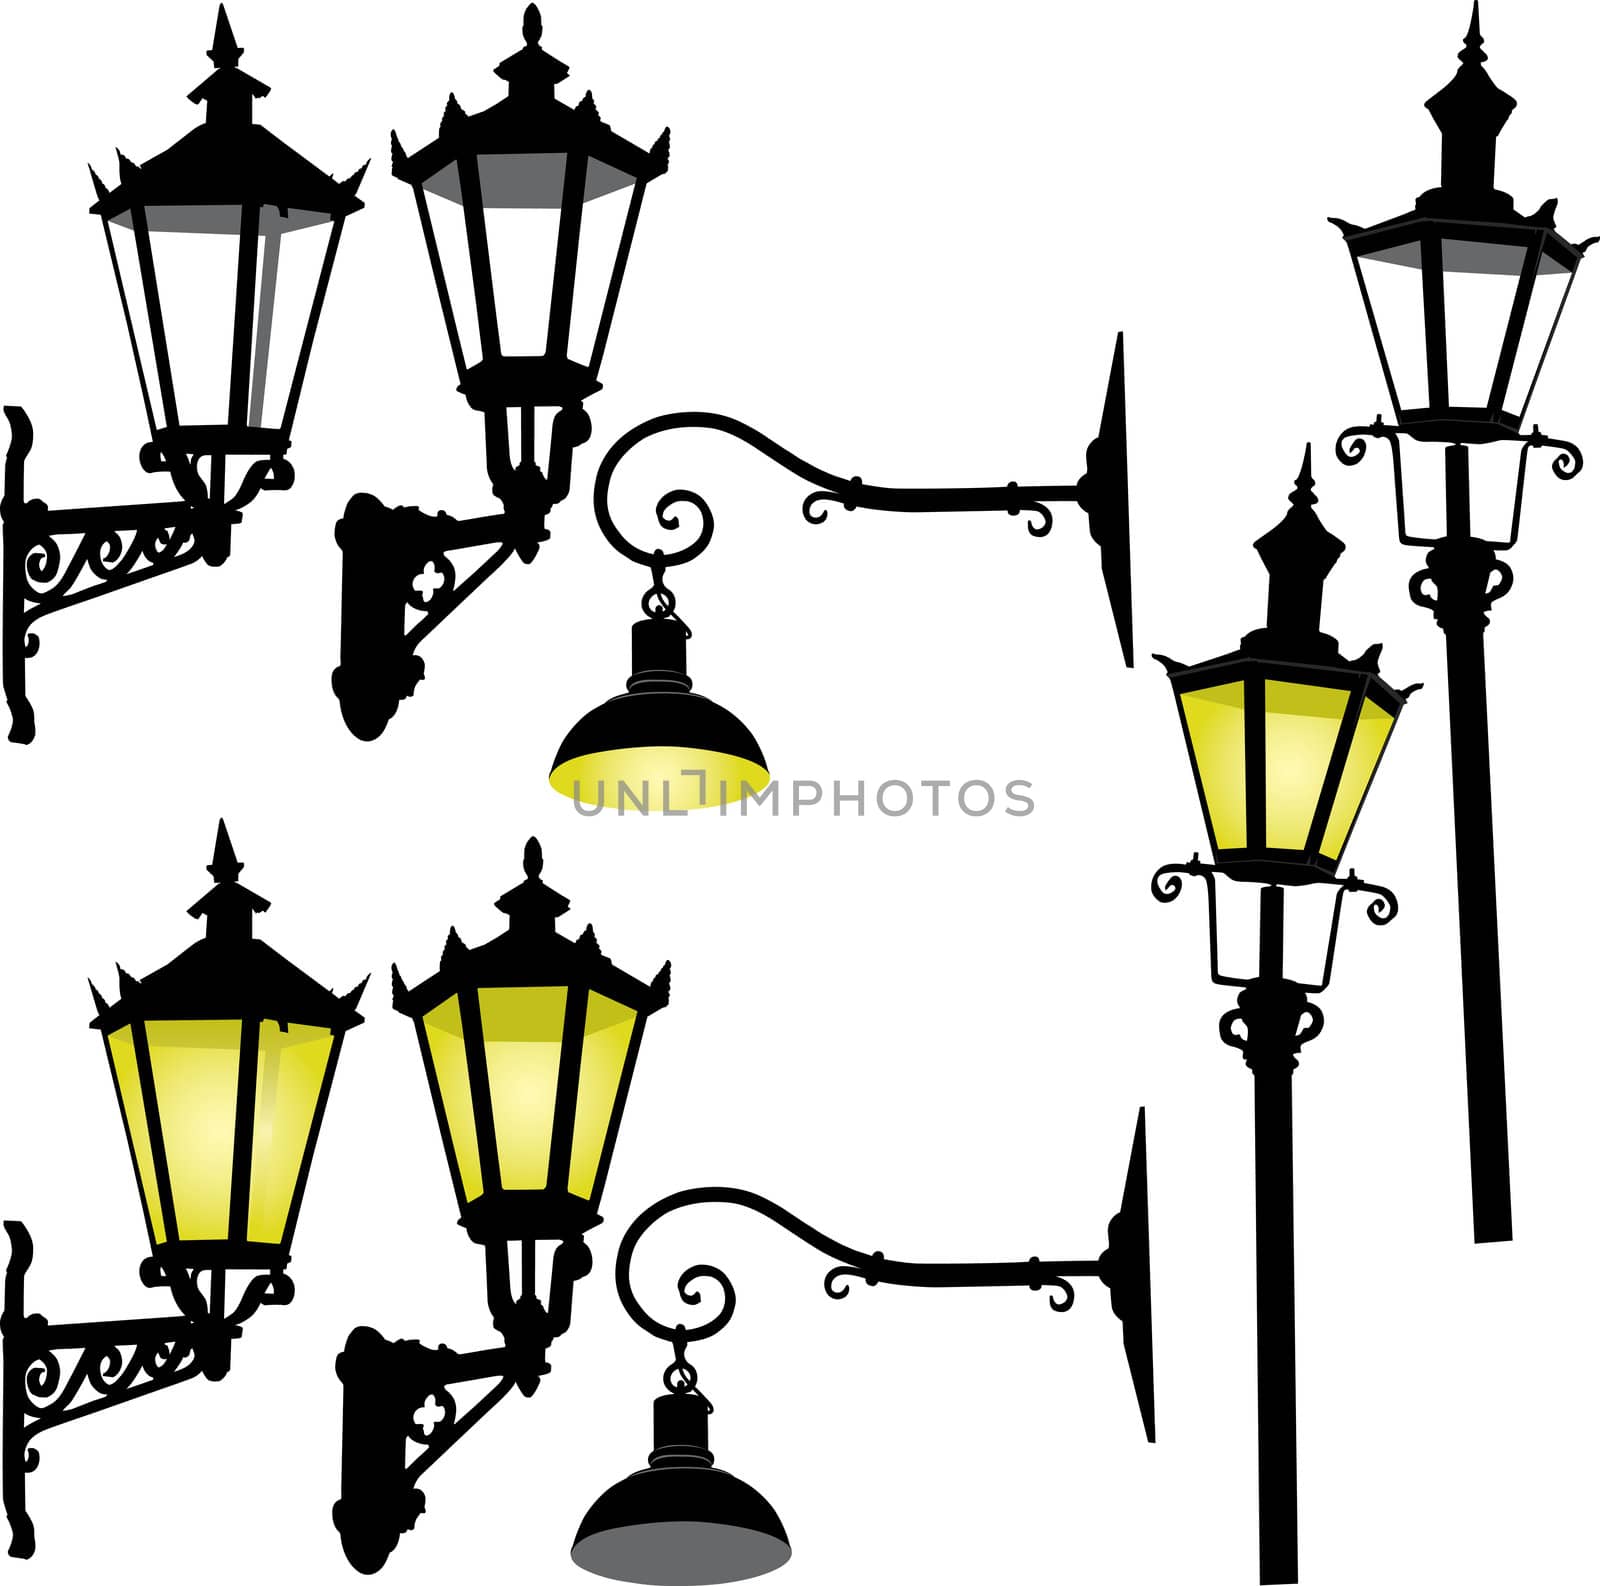 Retro street lamp and lattern vector illustration collection